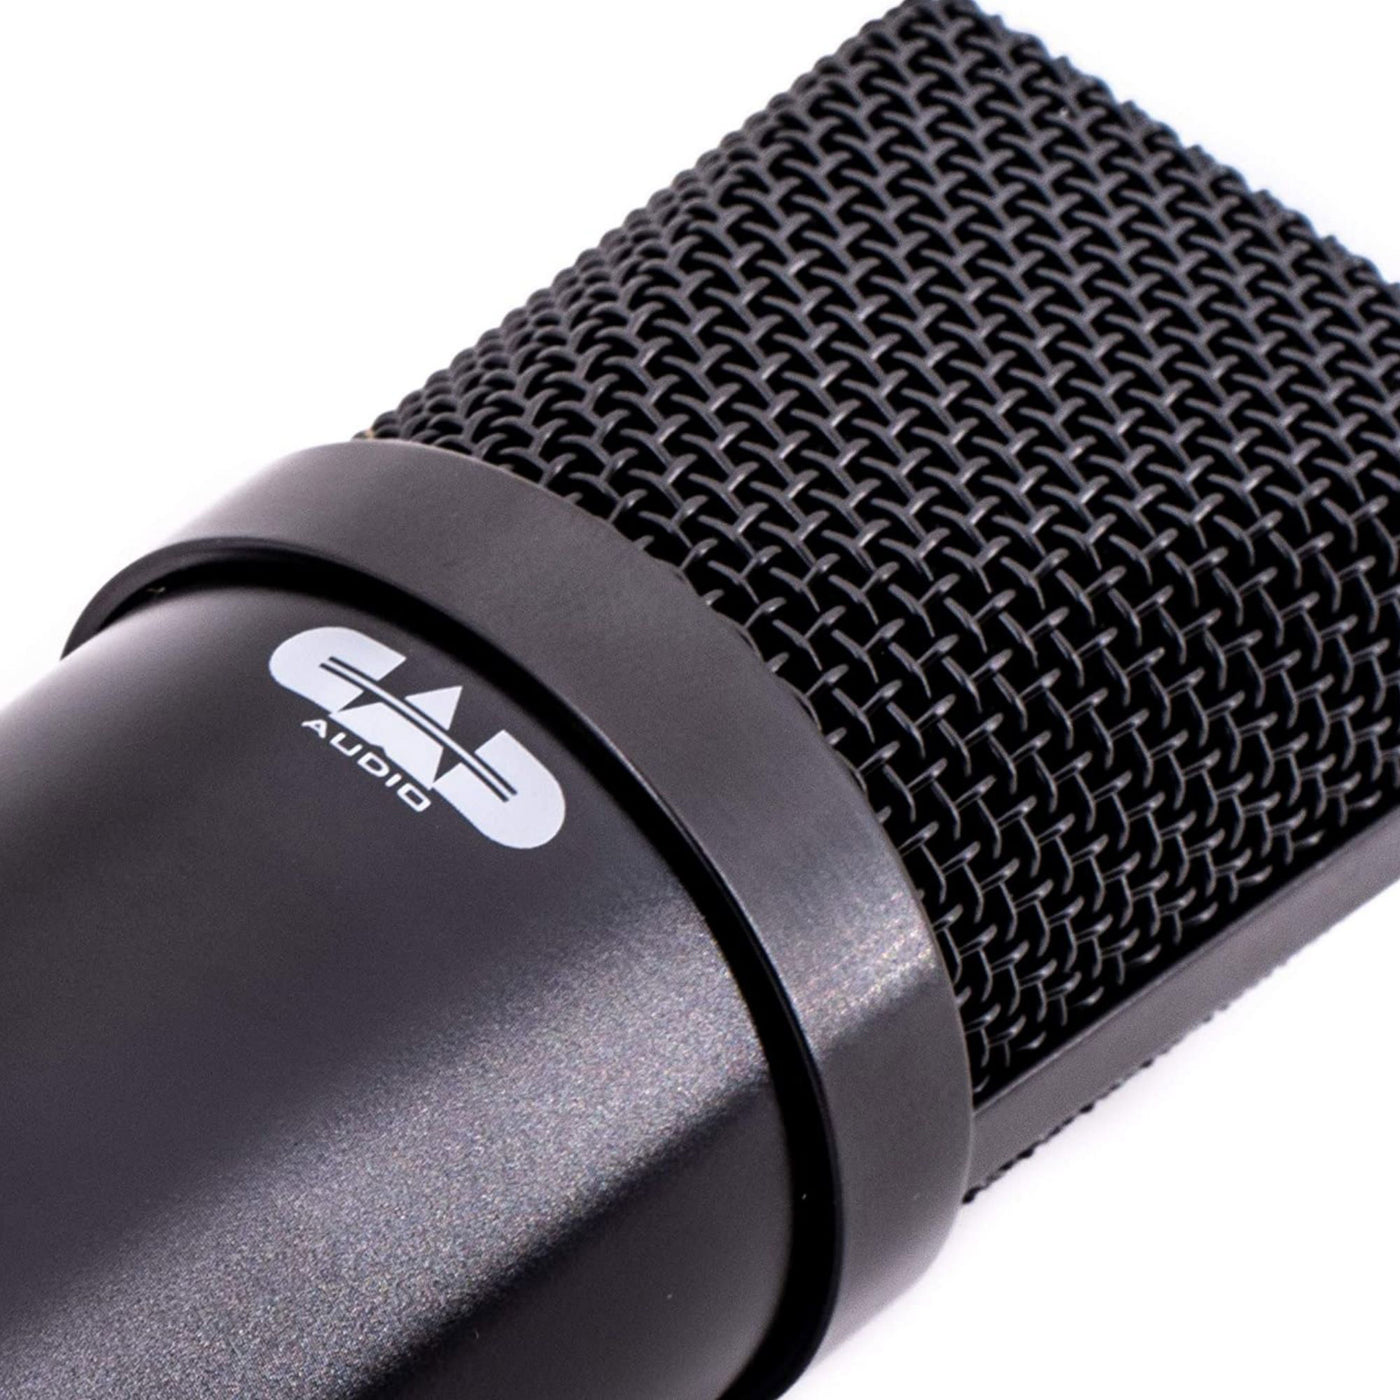 CAD Audio GXL1800 Large Format Side Address Studio Condenser Microphone (GXL1800)